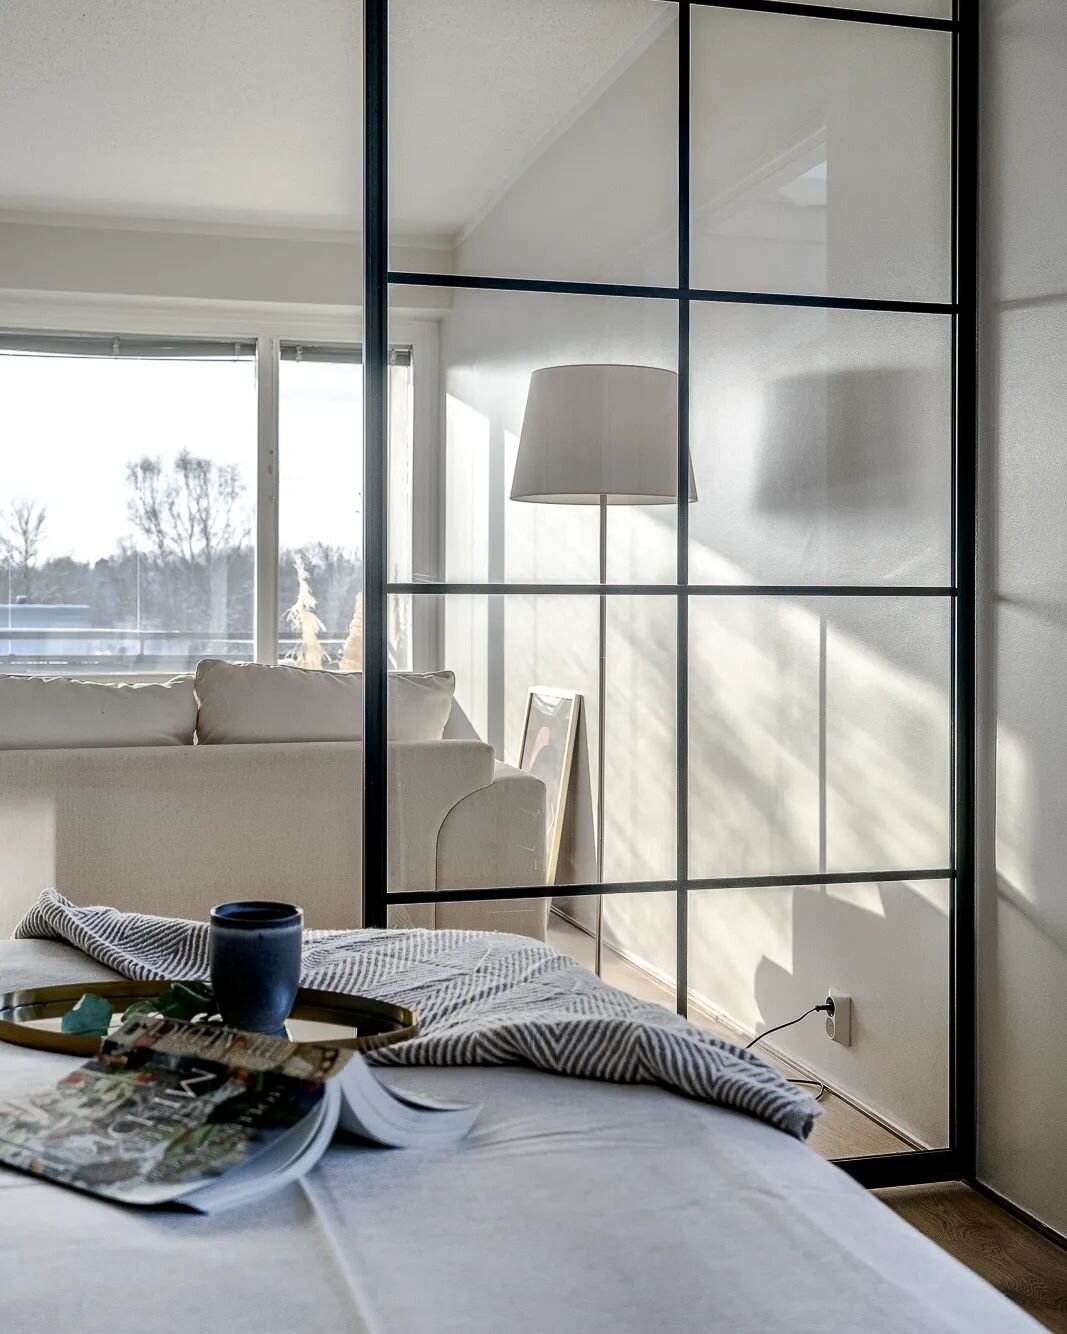 Naantalin aurinko ☀️
#bedroom #glassdoors #sunspots #nordichome #scandinavianhome #realestatephotography